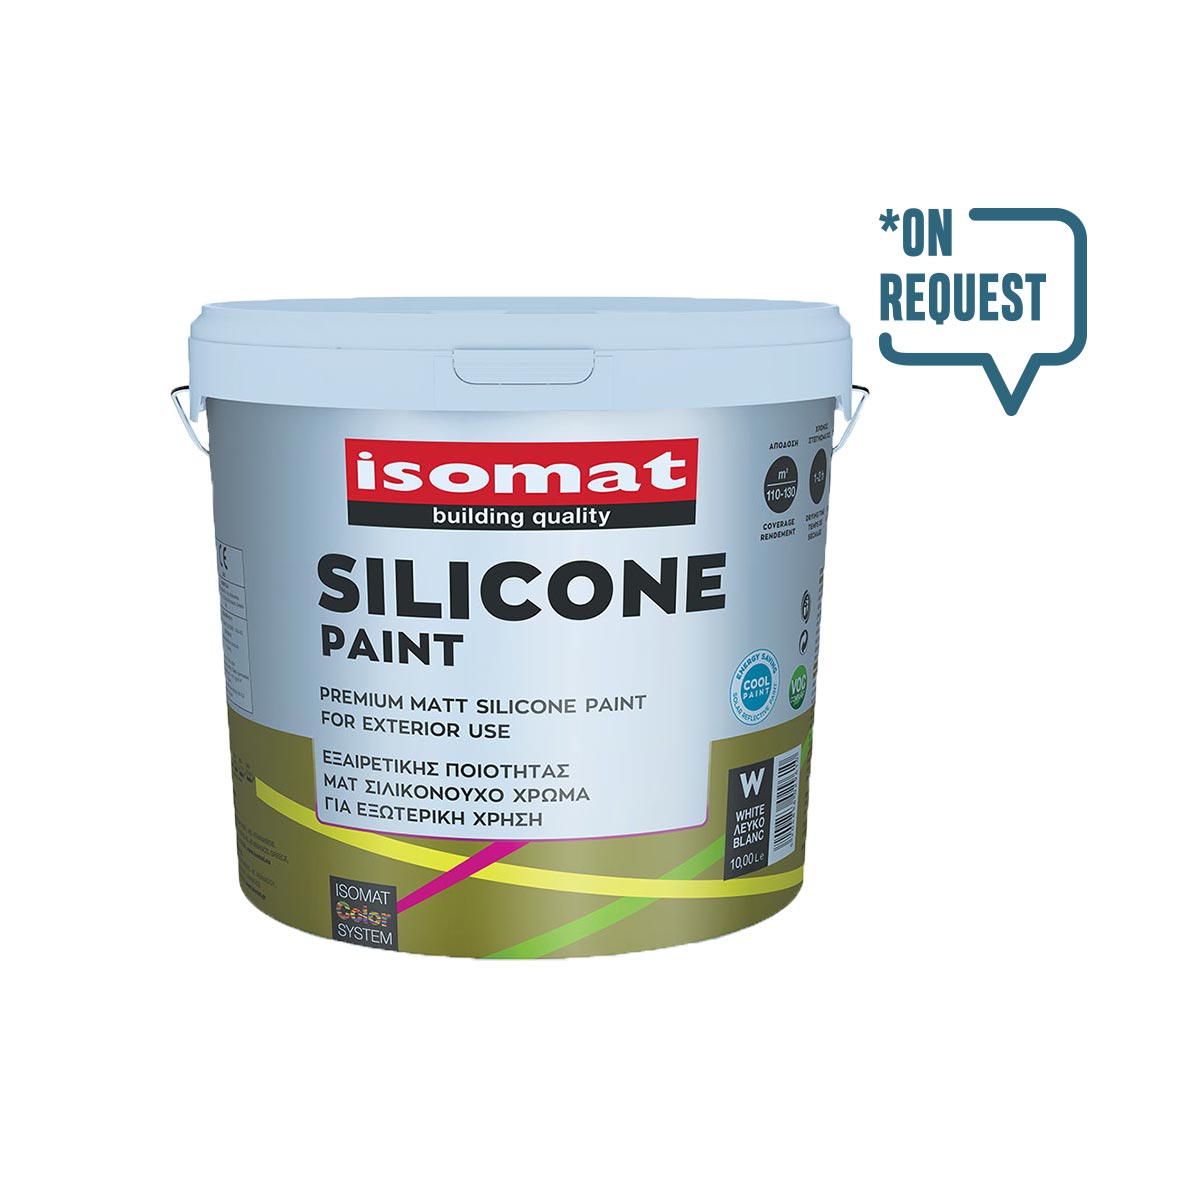 ISOMAT SILICONE PAINT - Acrylics, Exterior Paints, Paints & Renders - ISOMAT